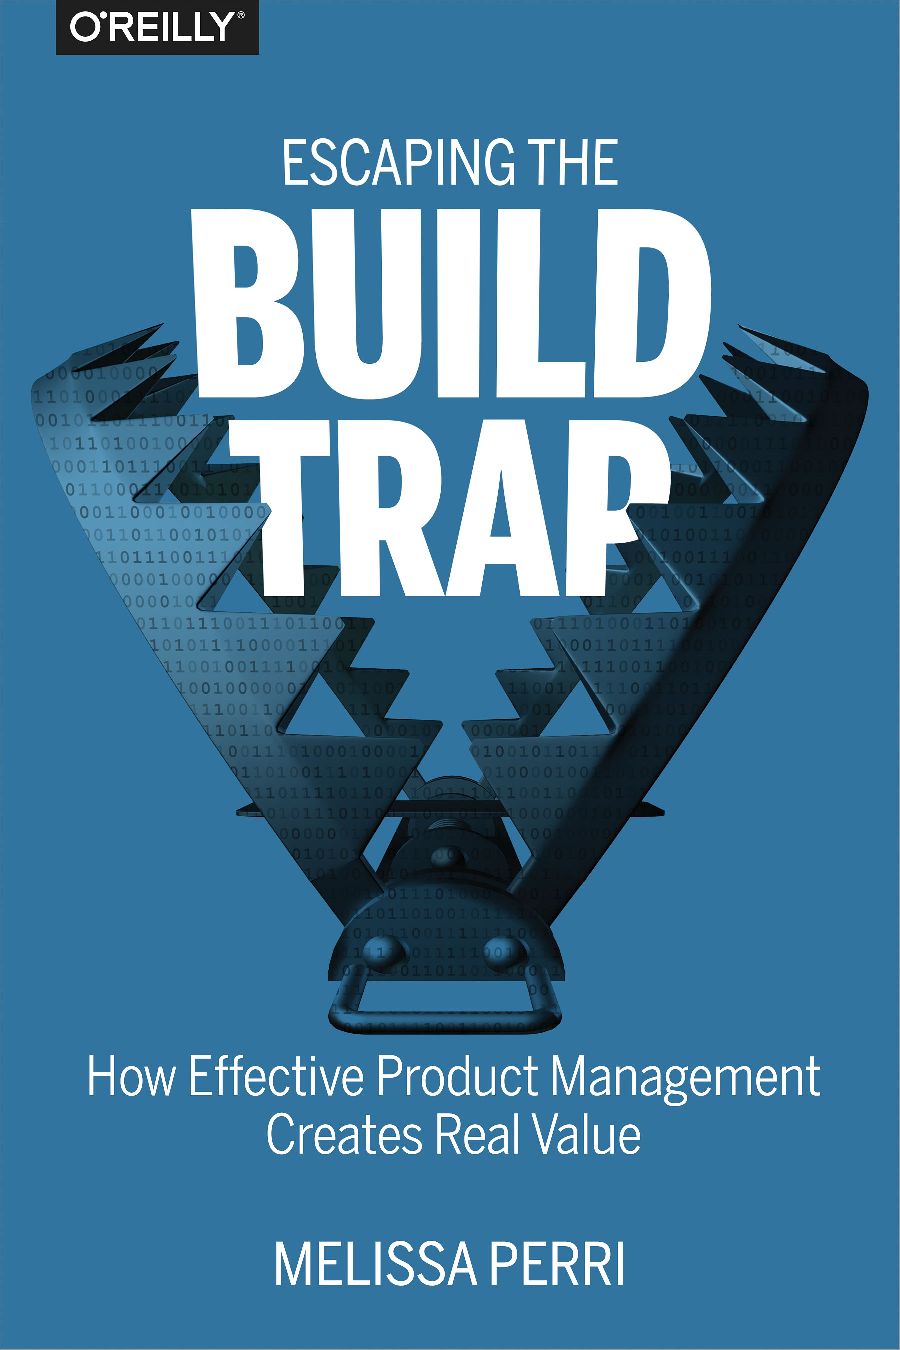 [PDF/ePub] Escaping the Build Trap